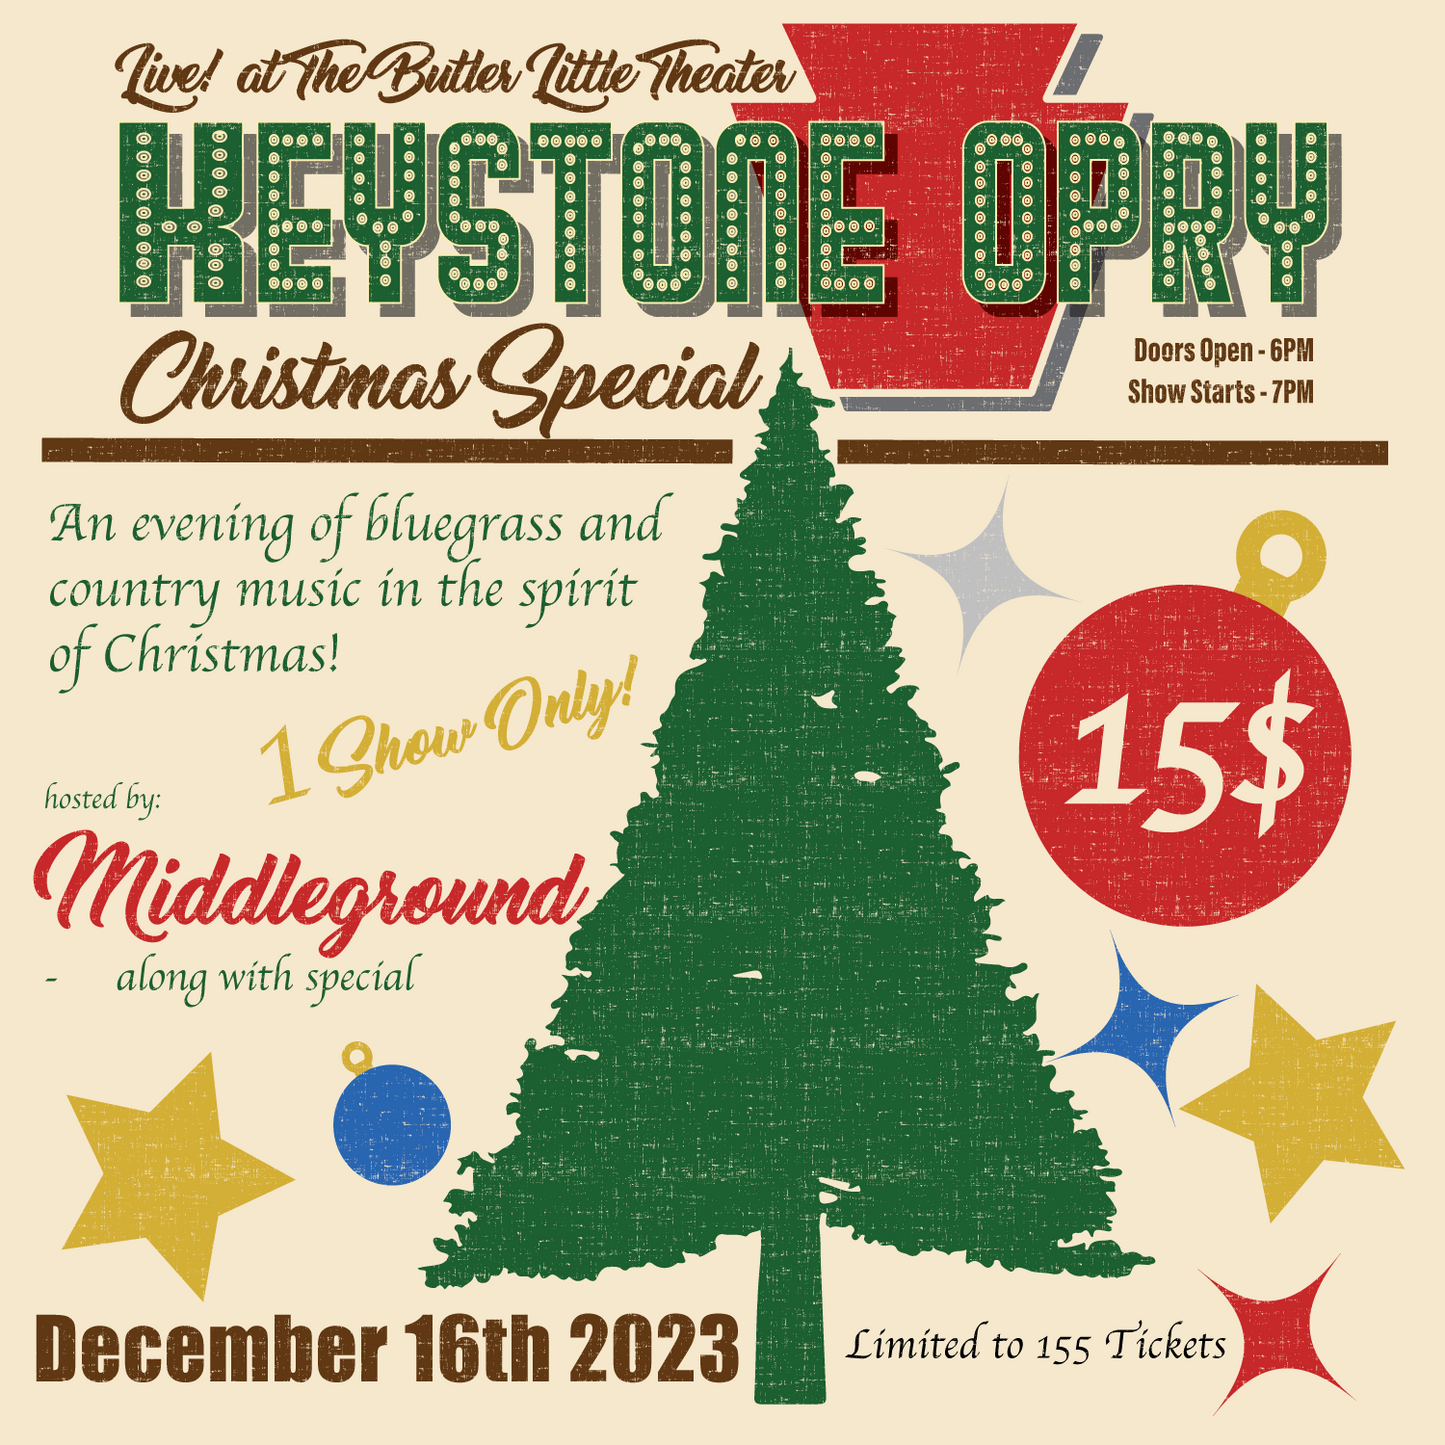 Keystone Opry Christmas Special December 16th 2023 @ 7:00PM